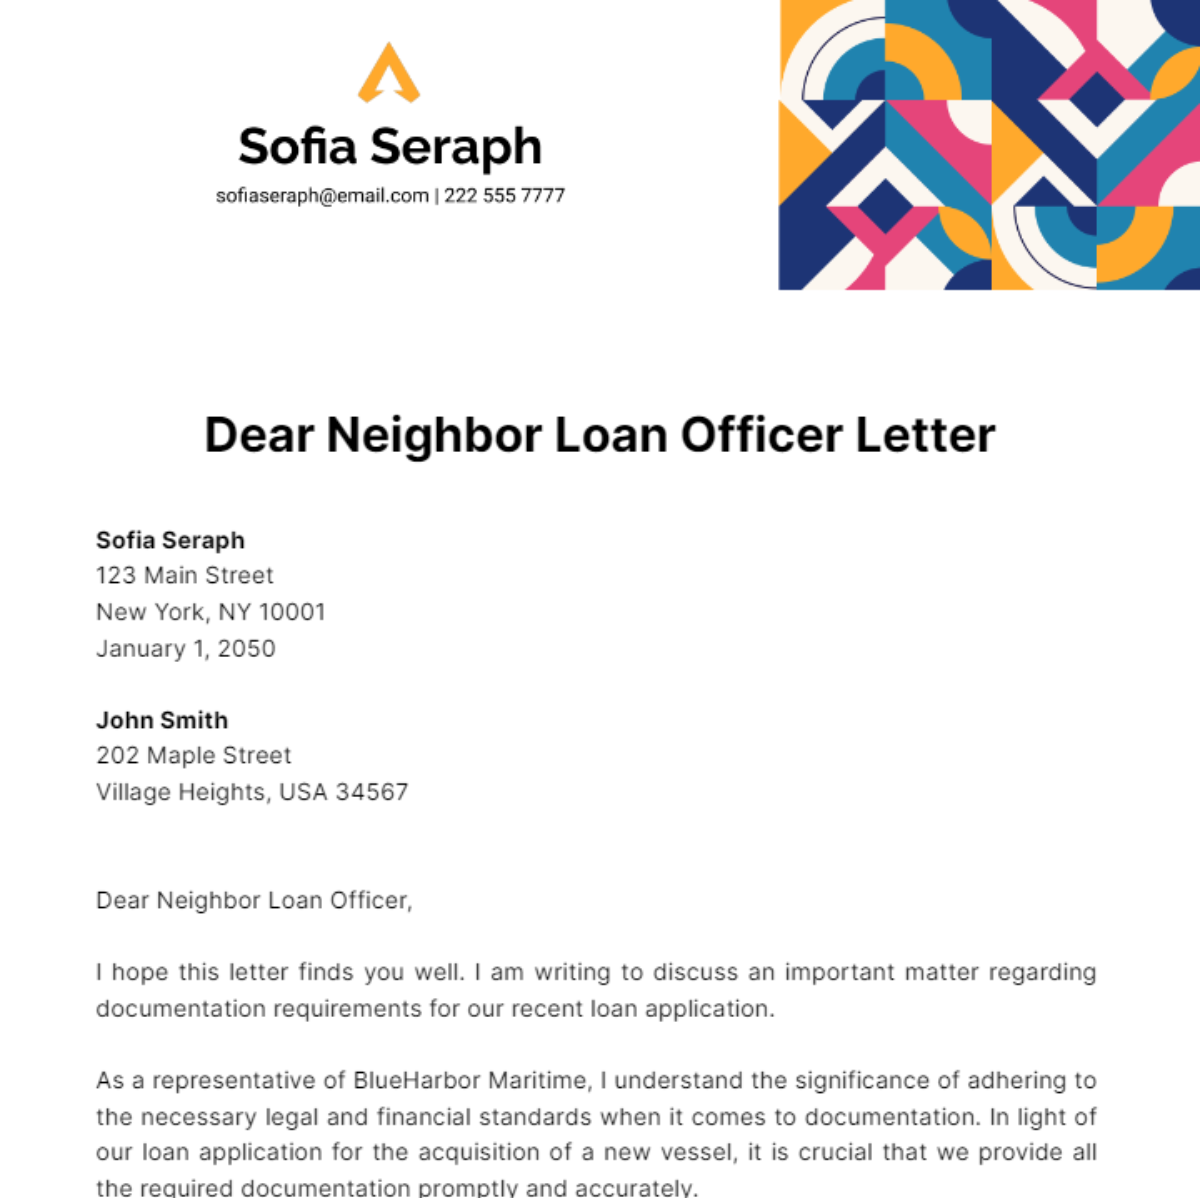 Dear Neighbor Loan Officer Letter Template